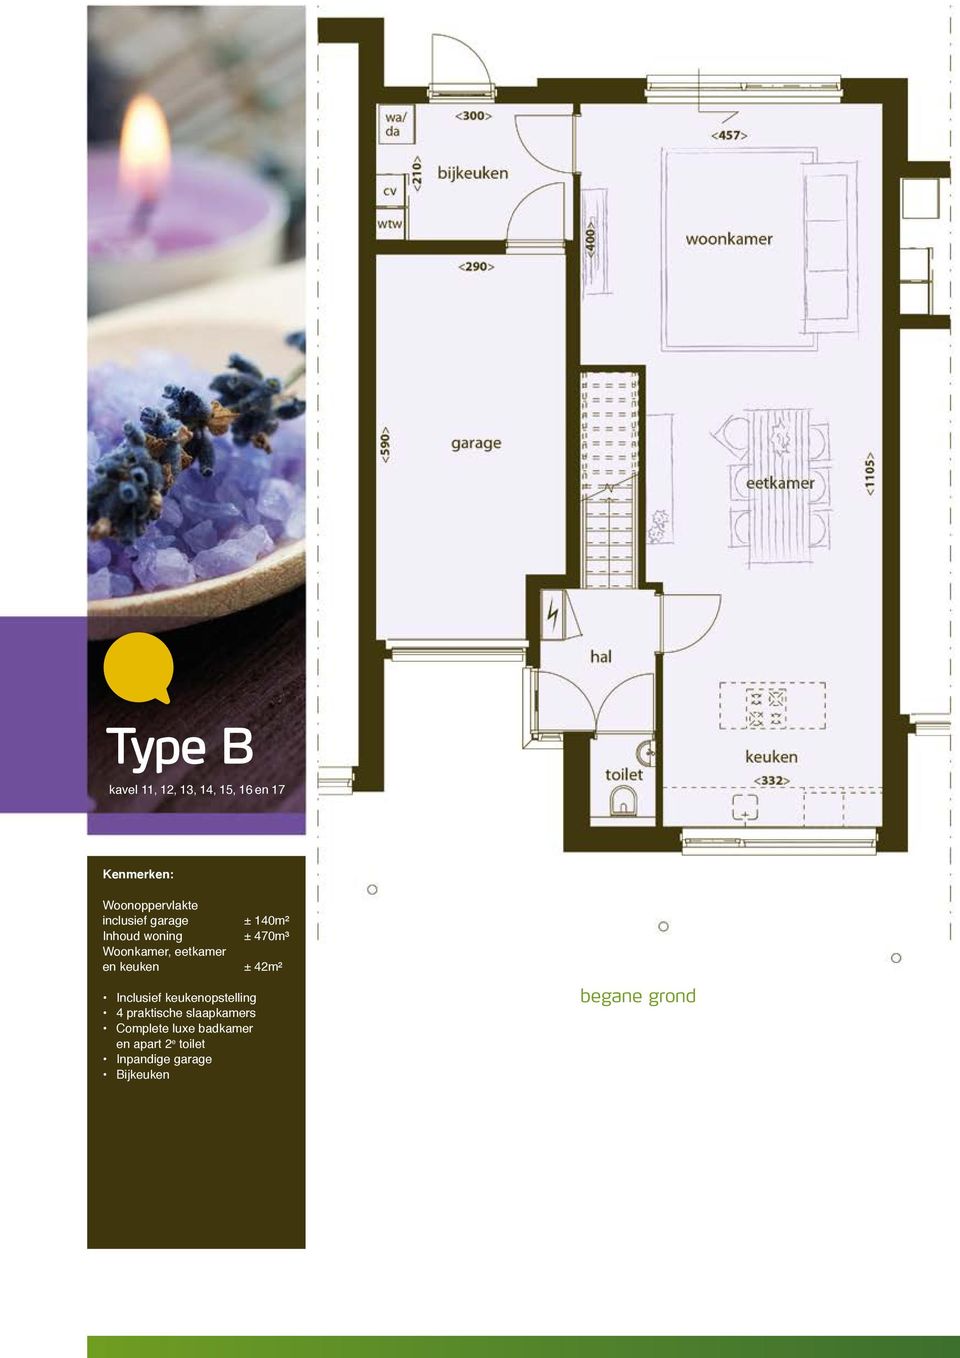 keuken ± 42m² Inclusief keukenopstelling 4 praktische slaapkamers